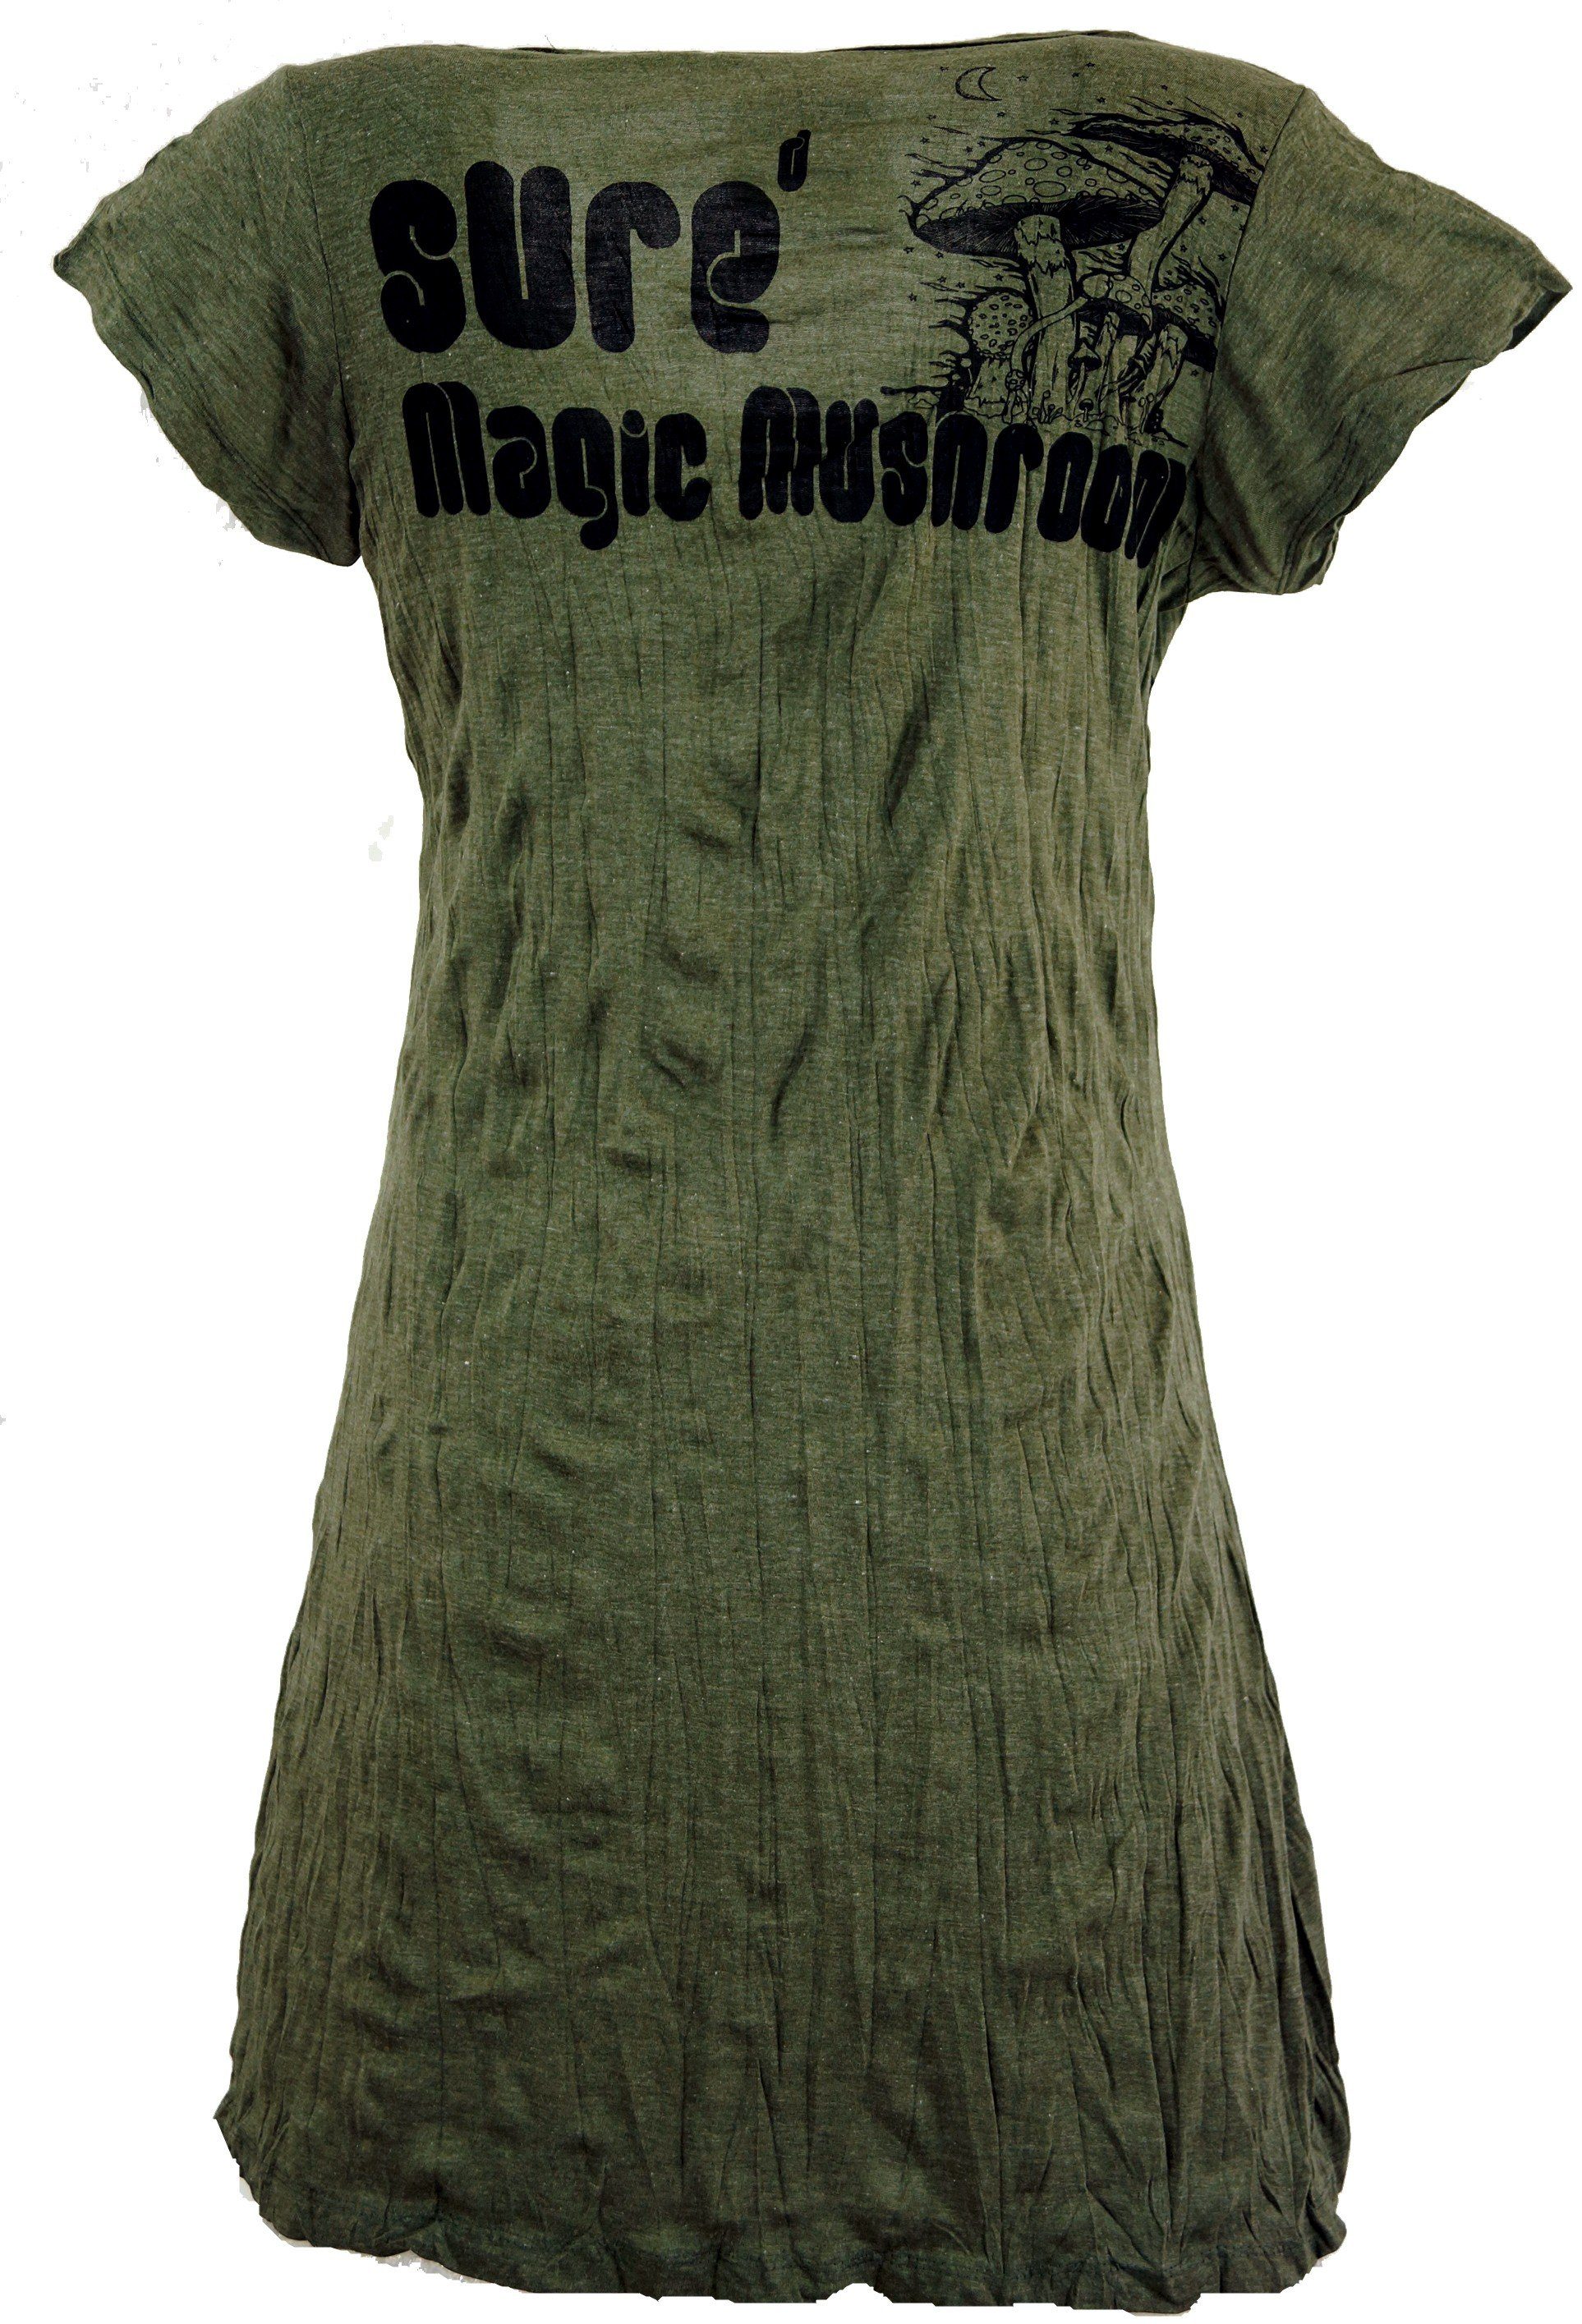 Guru-Shop T-Shirt Sure Long Shirt, Goa Minikleid Bekleidung - Style, Mushroom Festival, alternative Magic olive